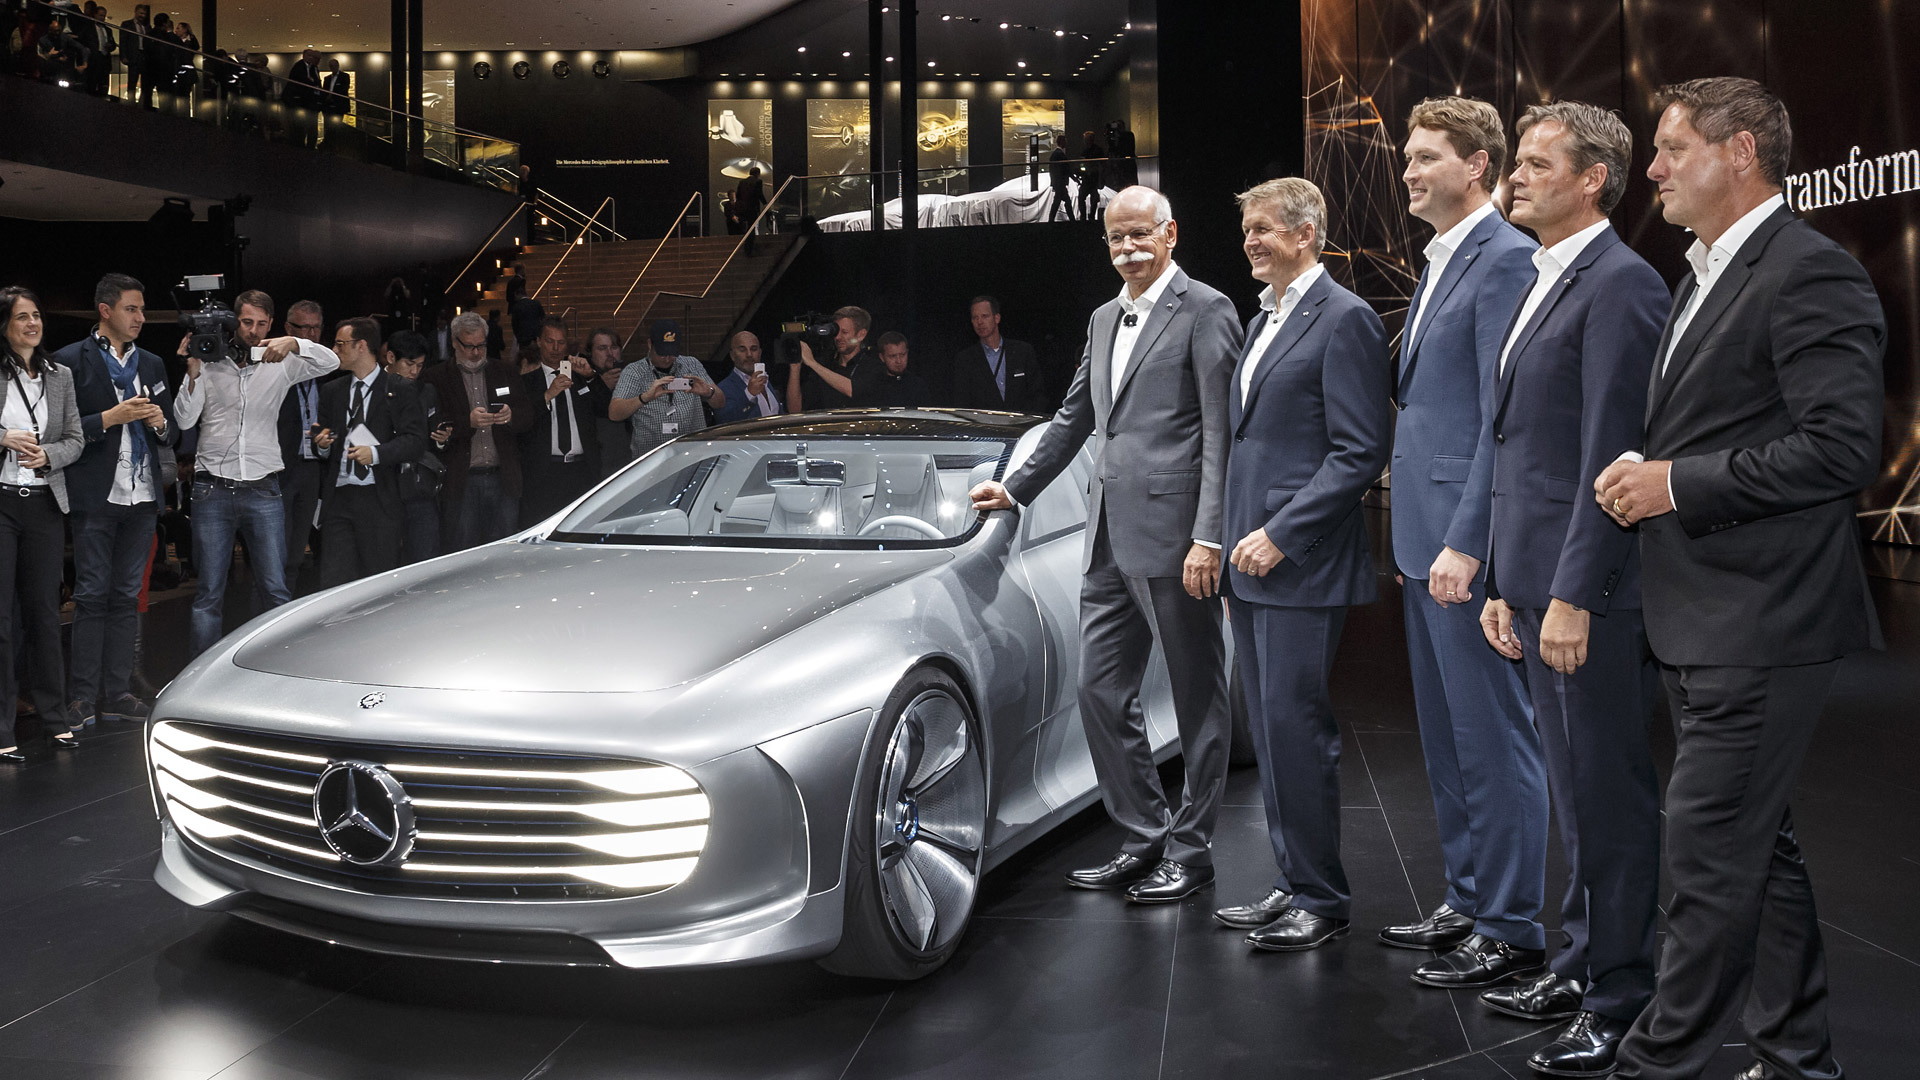 Mercedes-Benz Intelligent Aerodynamic Automobile concept, 2015 Frankfurt Auto Show